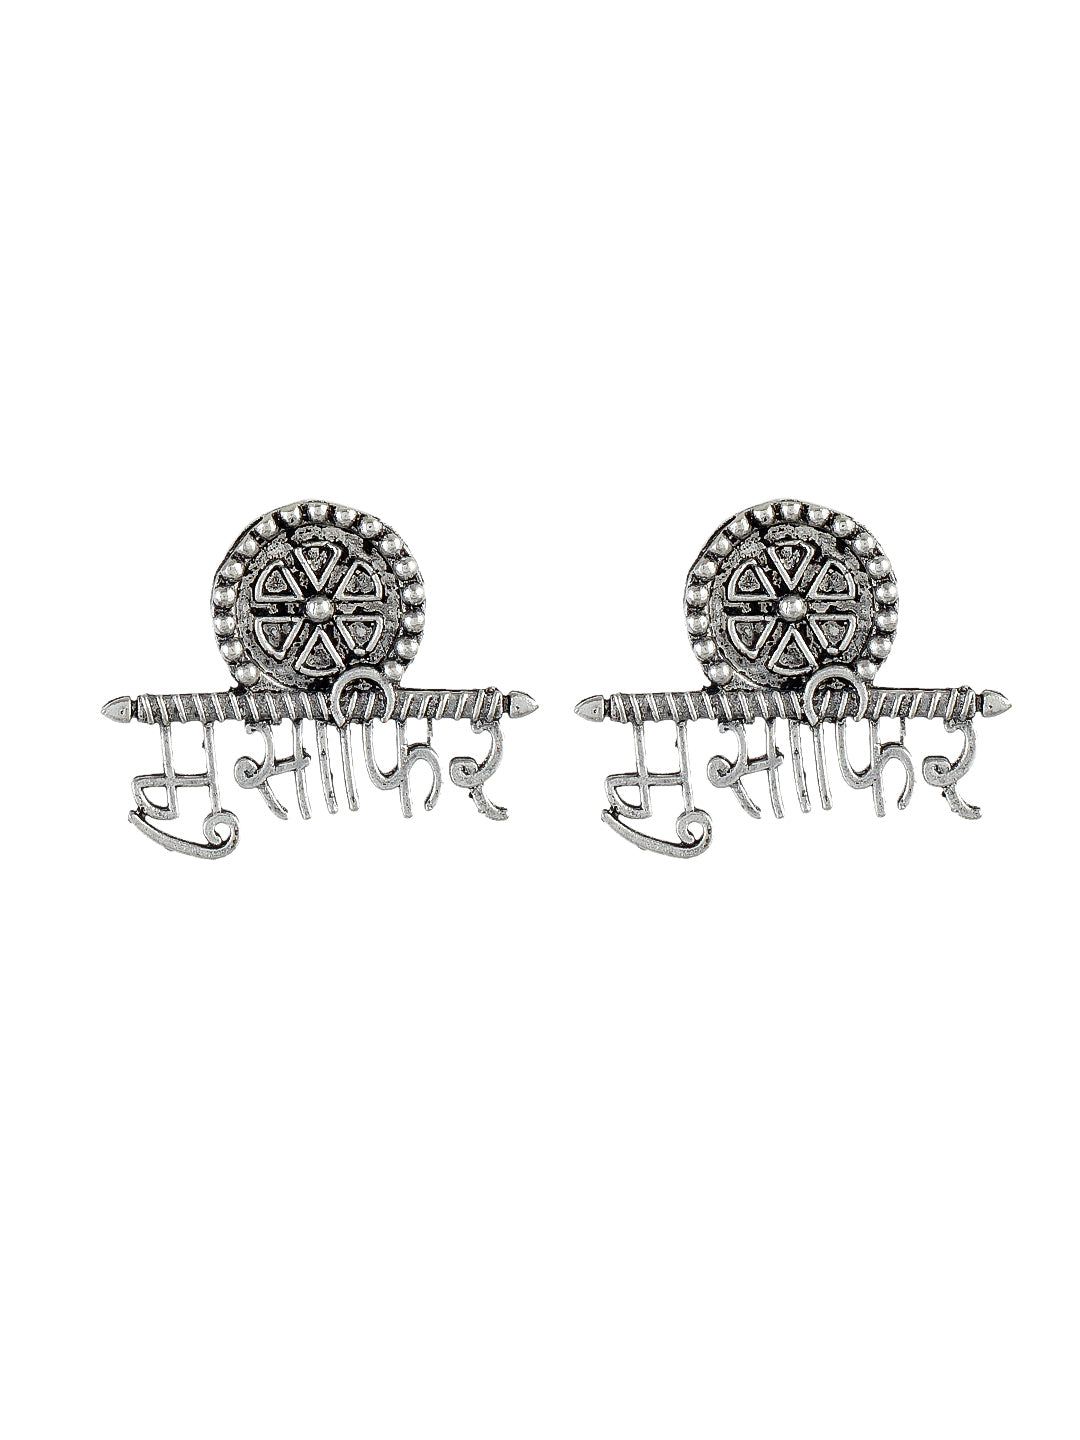 Oxidized Silver Plated Handmade Musafir Studs Earrings For Women